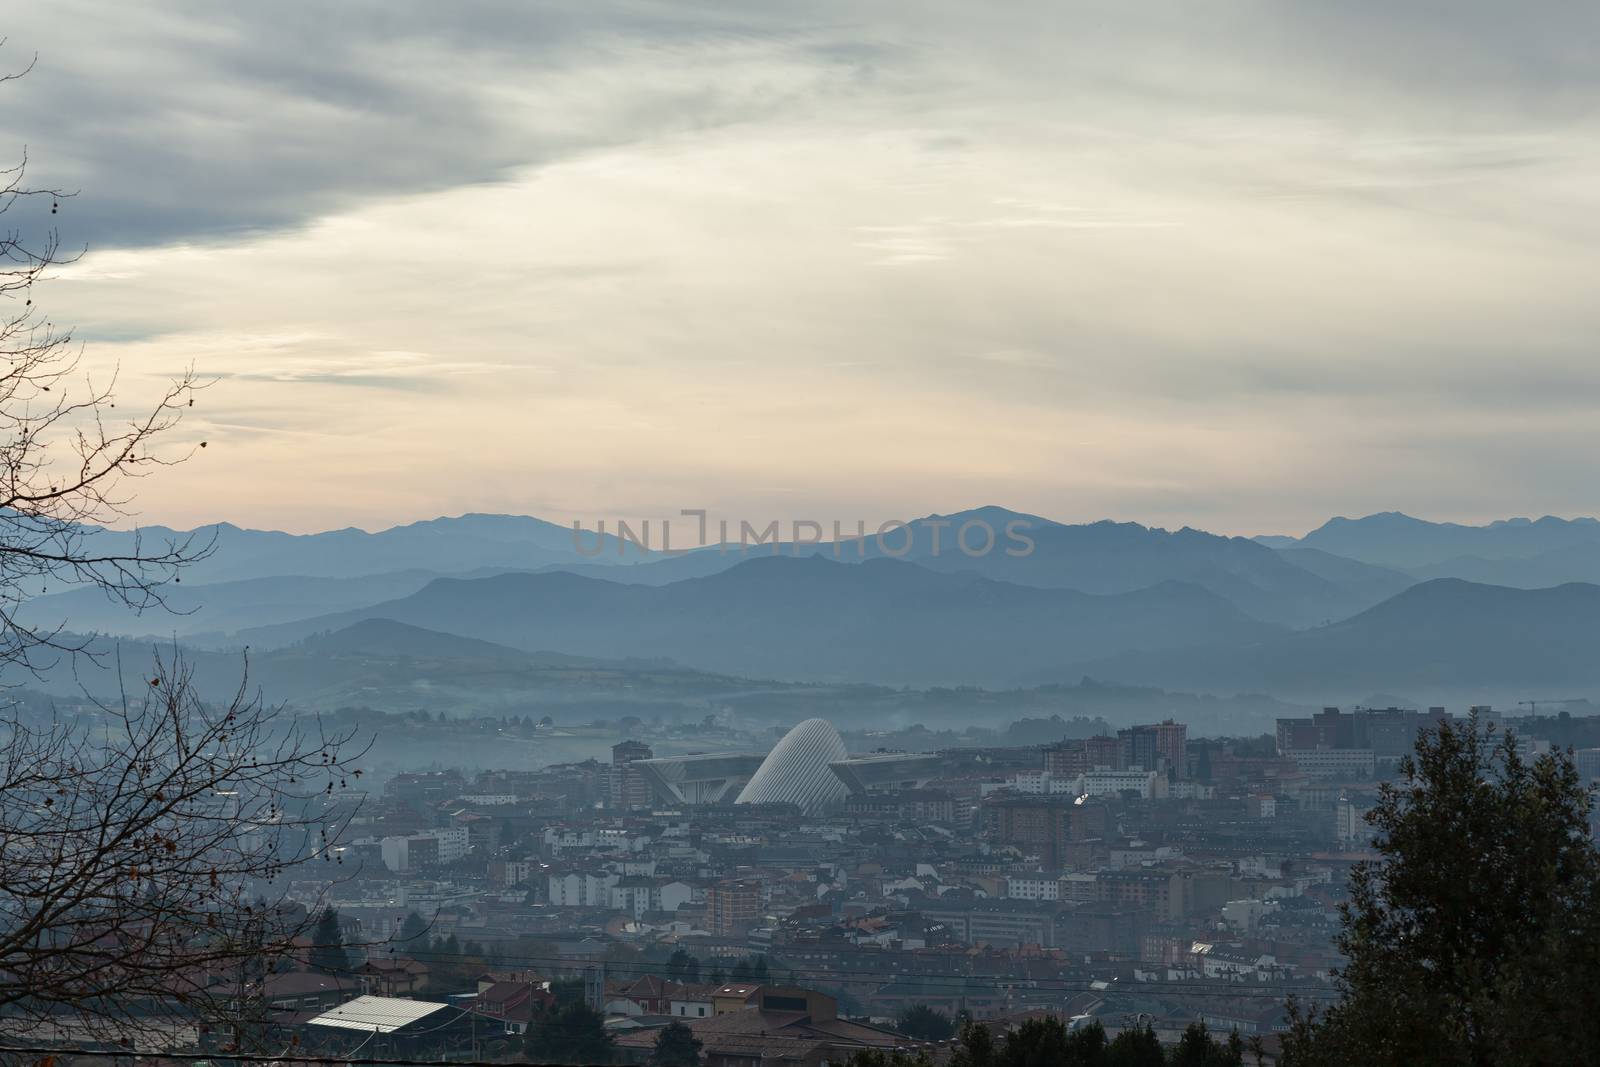 View of Oviedo with Palacio de Congresos from Monte Naranco, Spain